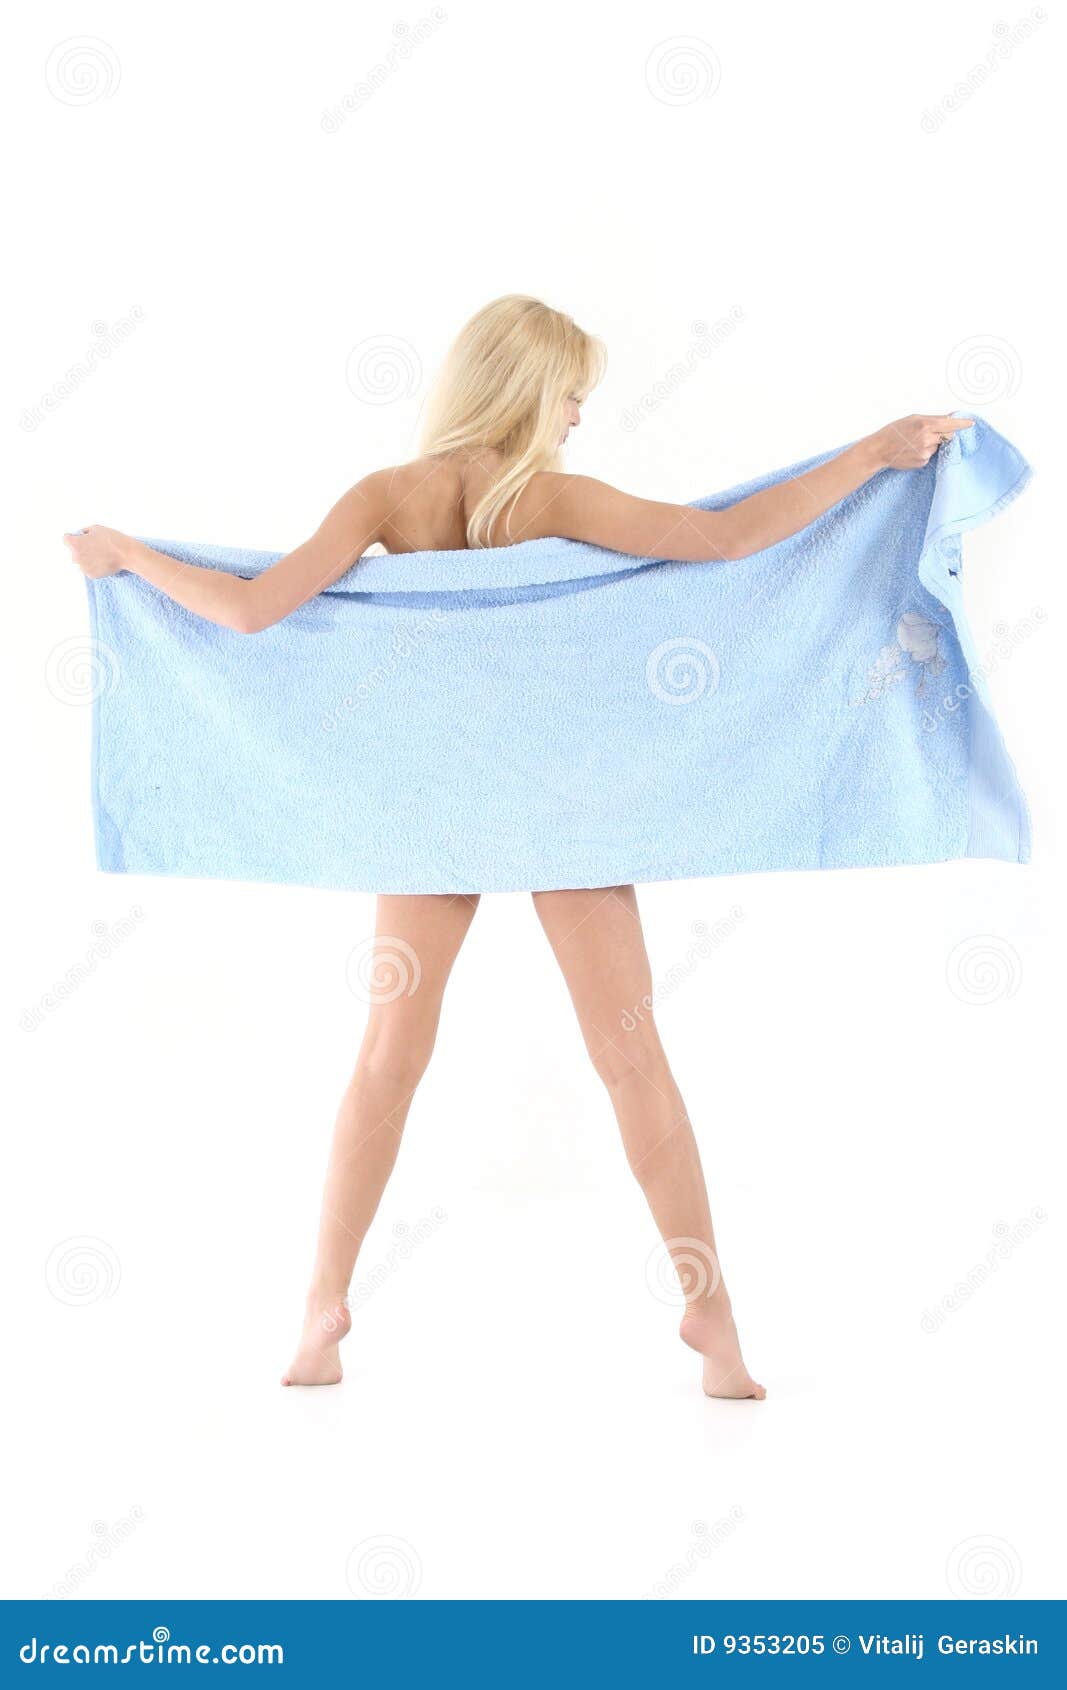 Прикрылась полотенцем. Девушка в одном полотенце. Блондинка в синем полотенце. Девушка прикрывается полотенцем. Девушка с синим полотенцем.